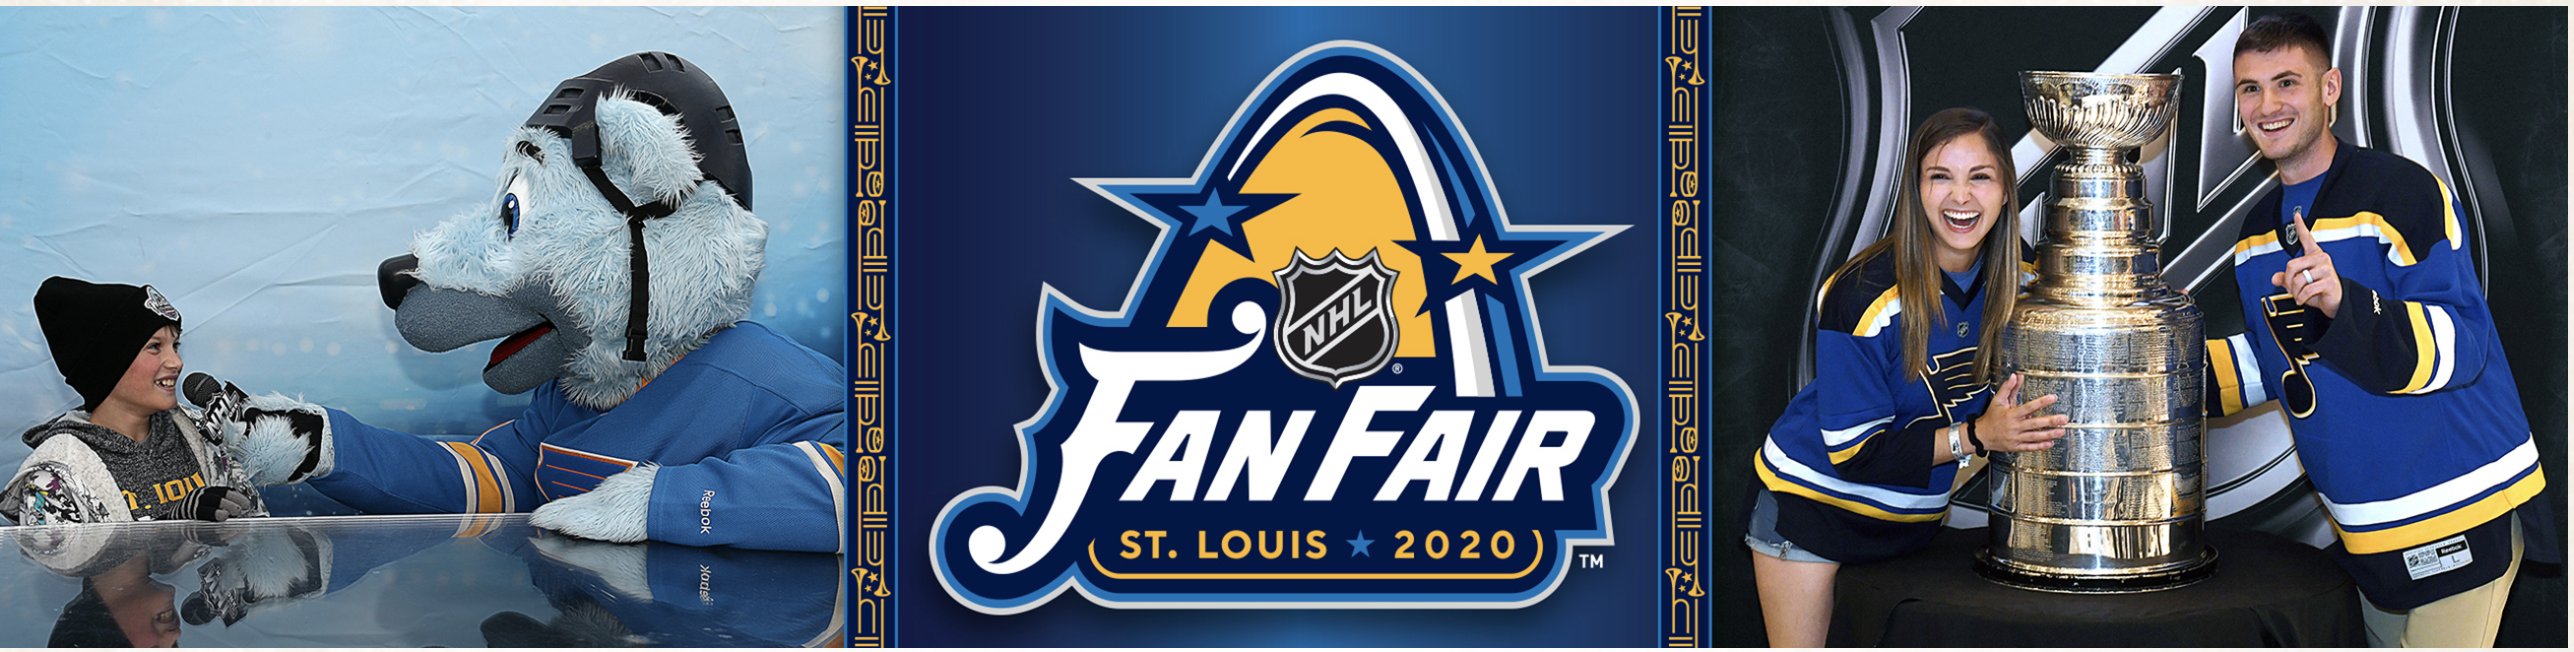 NHL All-Star Game Fan Fair.png